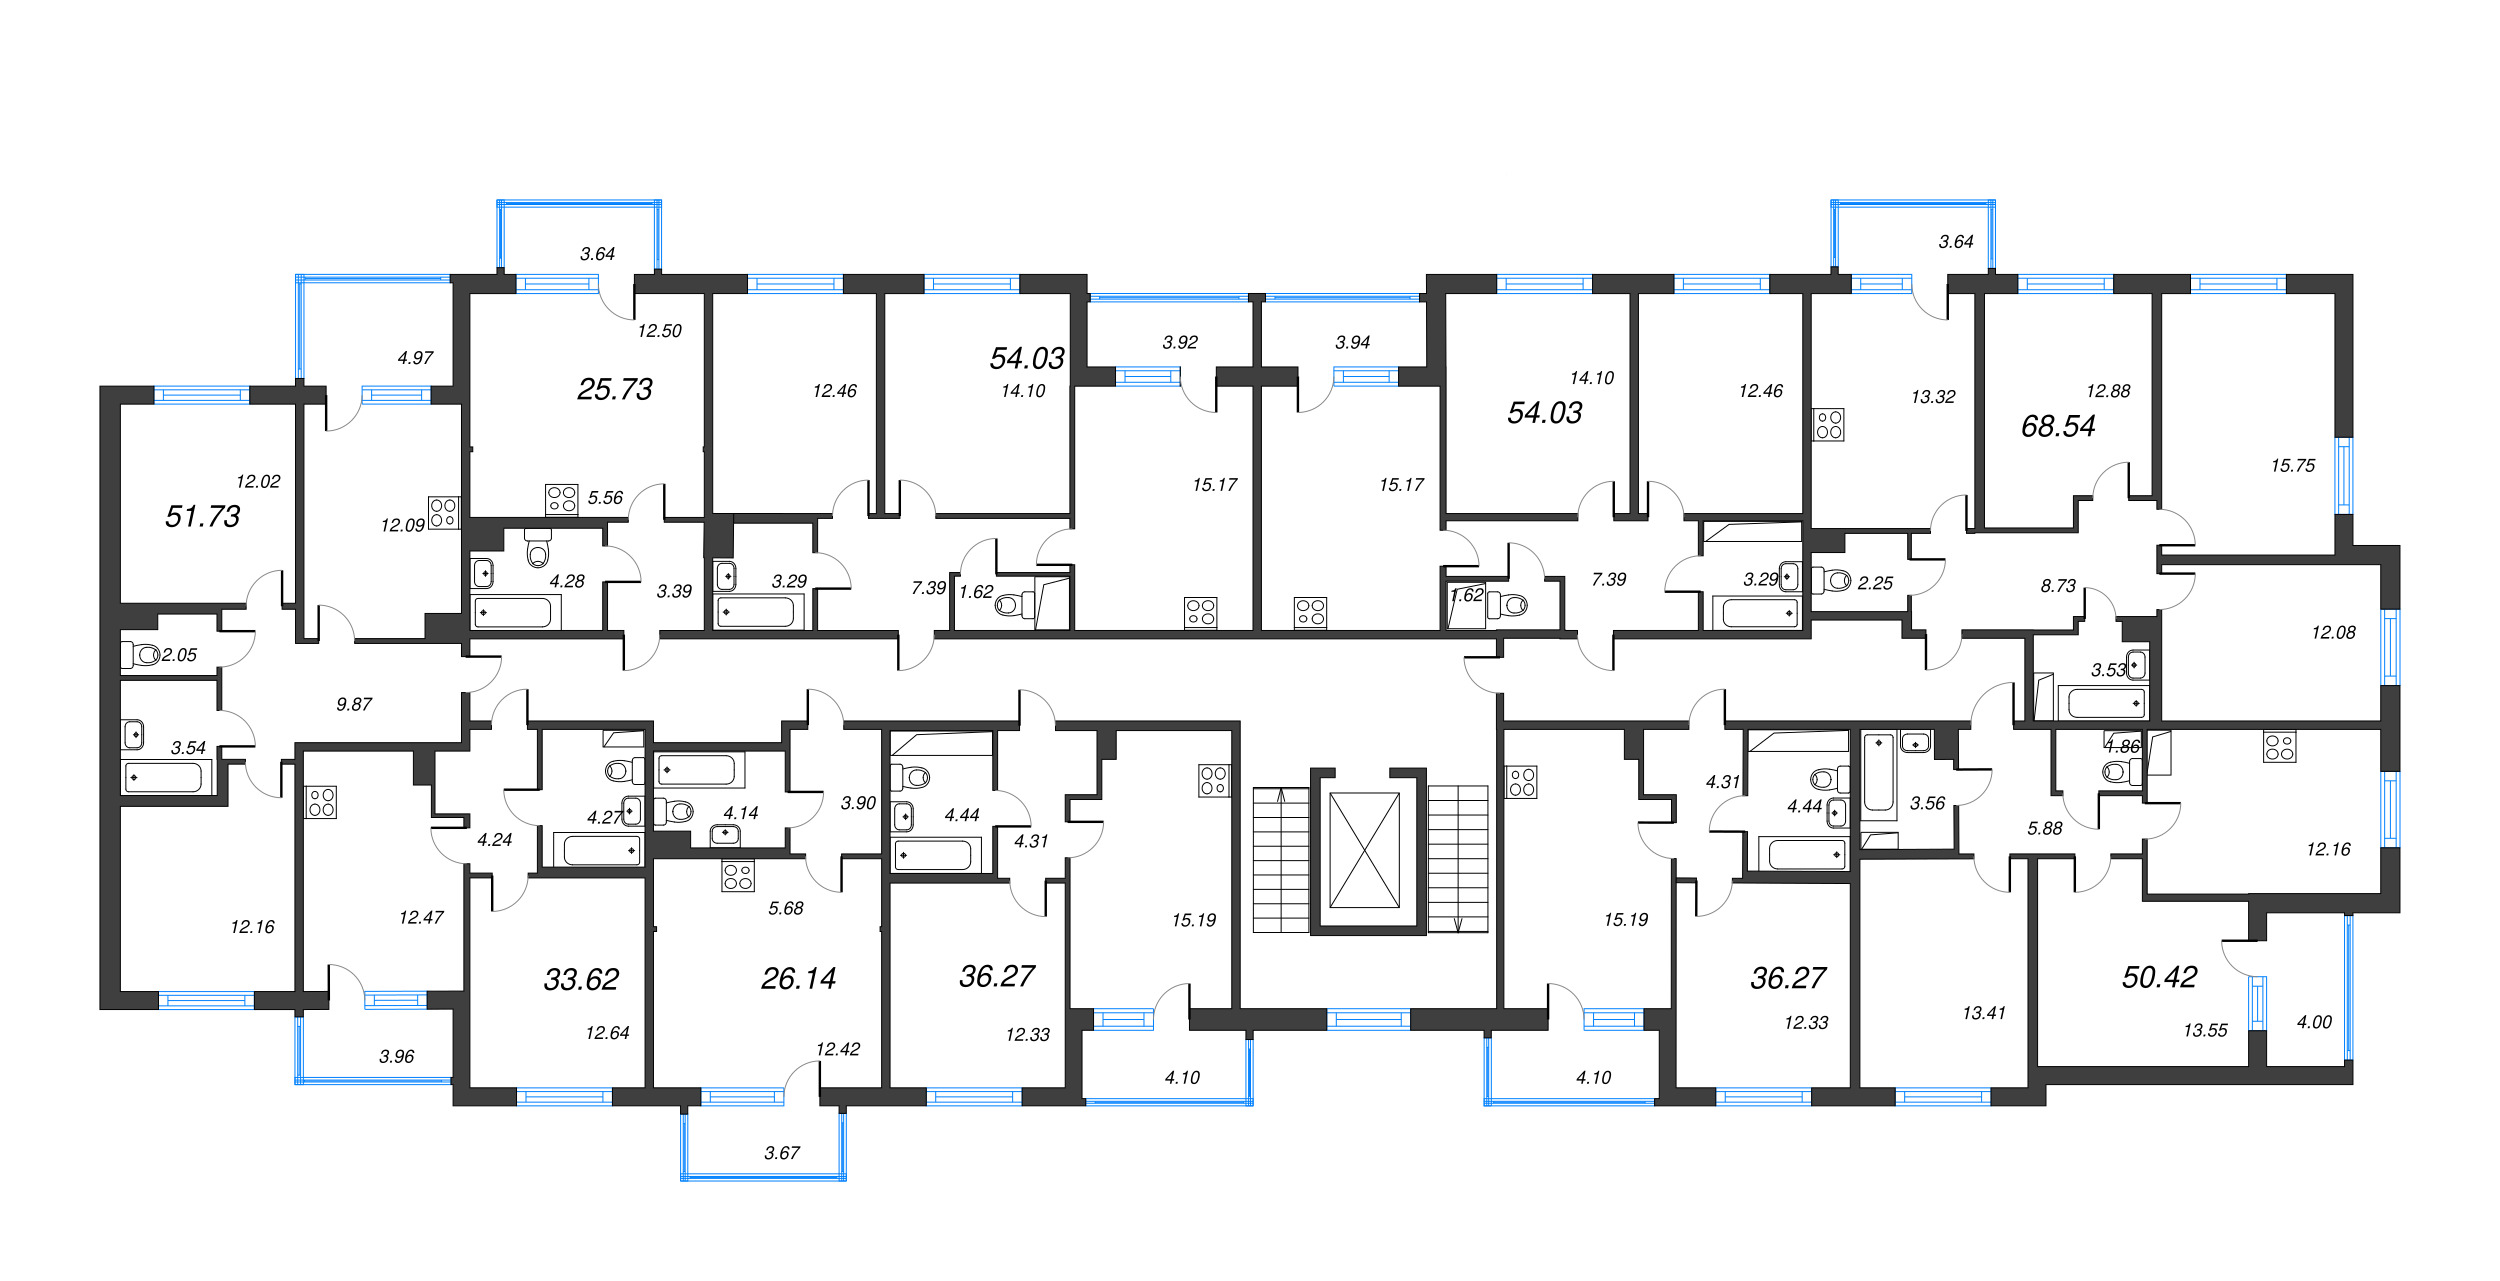 2-комнатная (Евро) квартира, 36.27 м² - планировка этажа